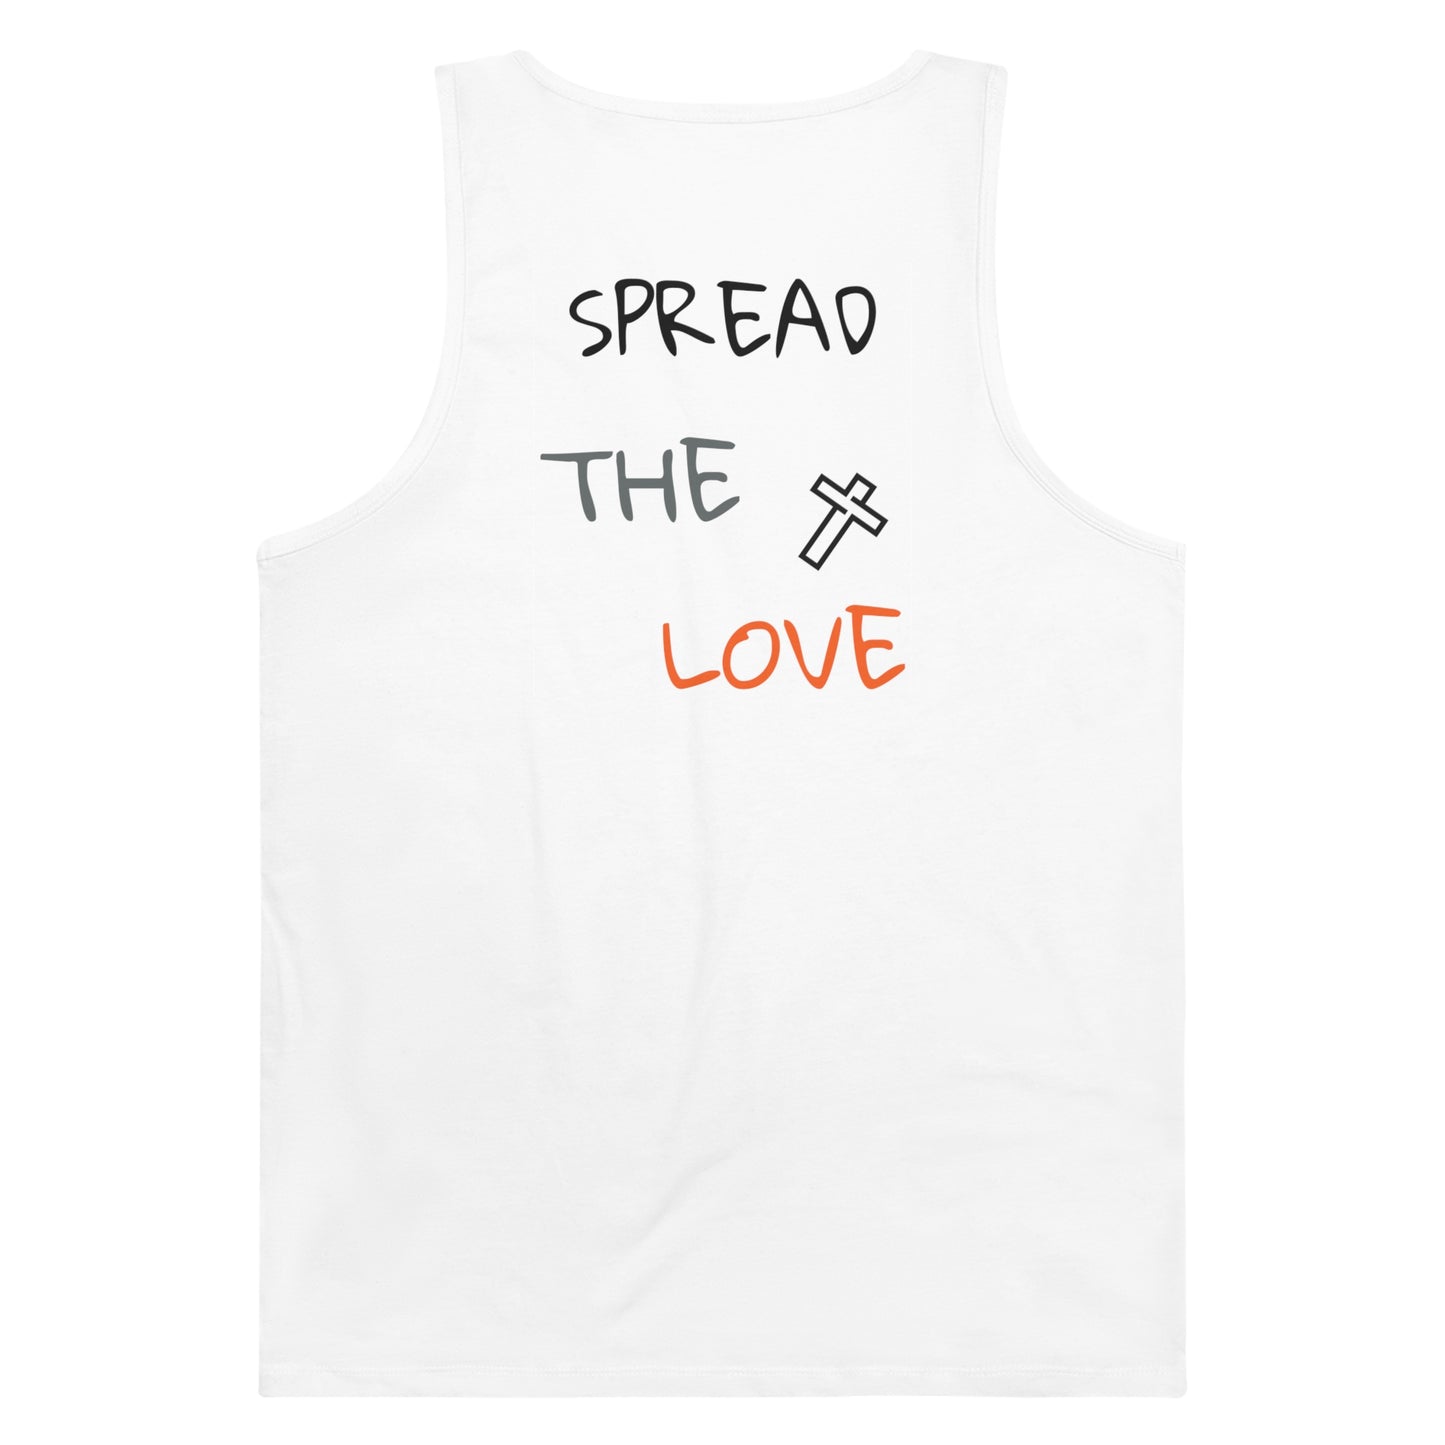 Spread The Love Artwork Tank Top